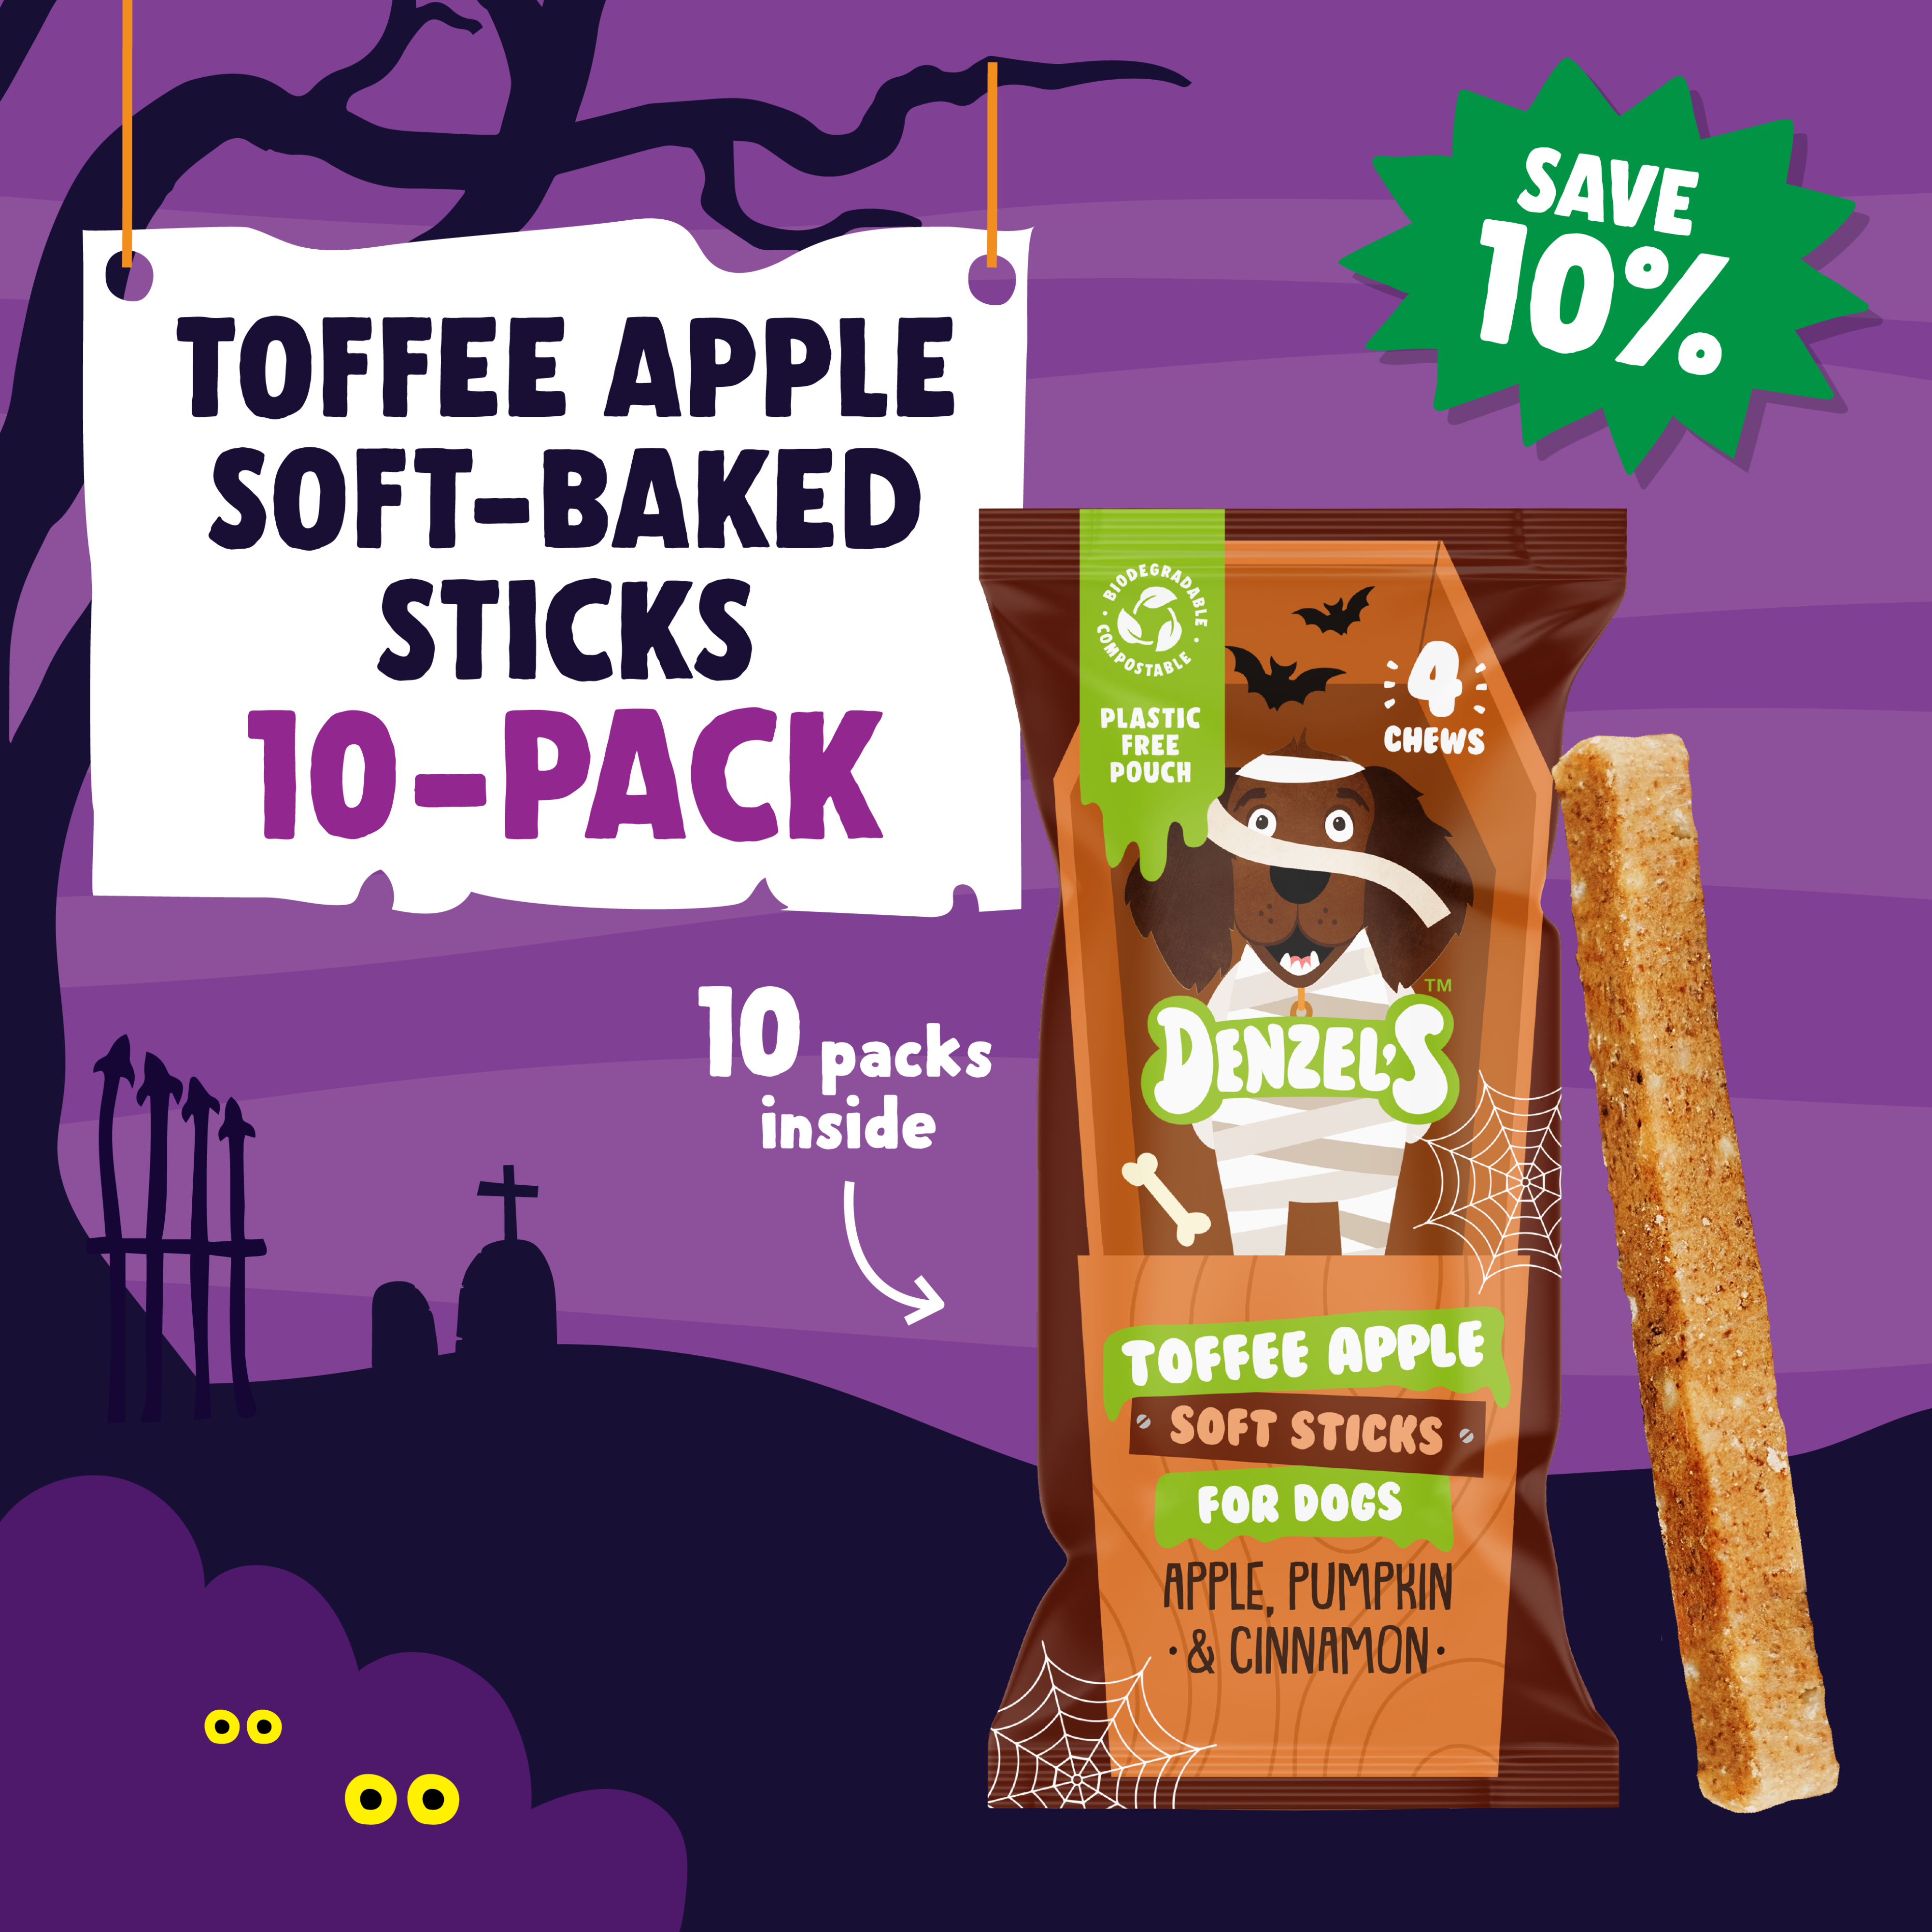 Toffee Apple Soft-Baked Sticks 10-Pack